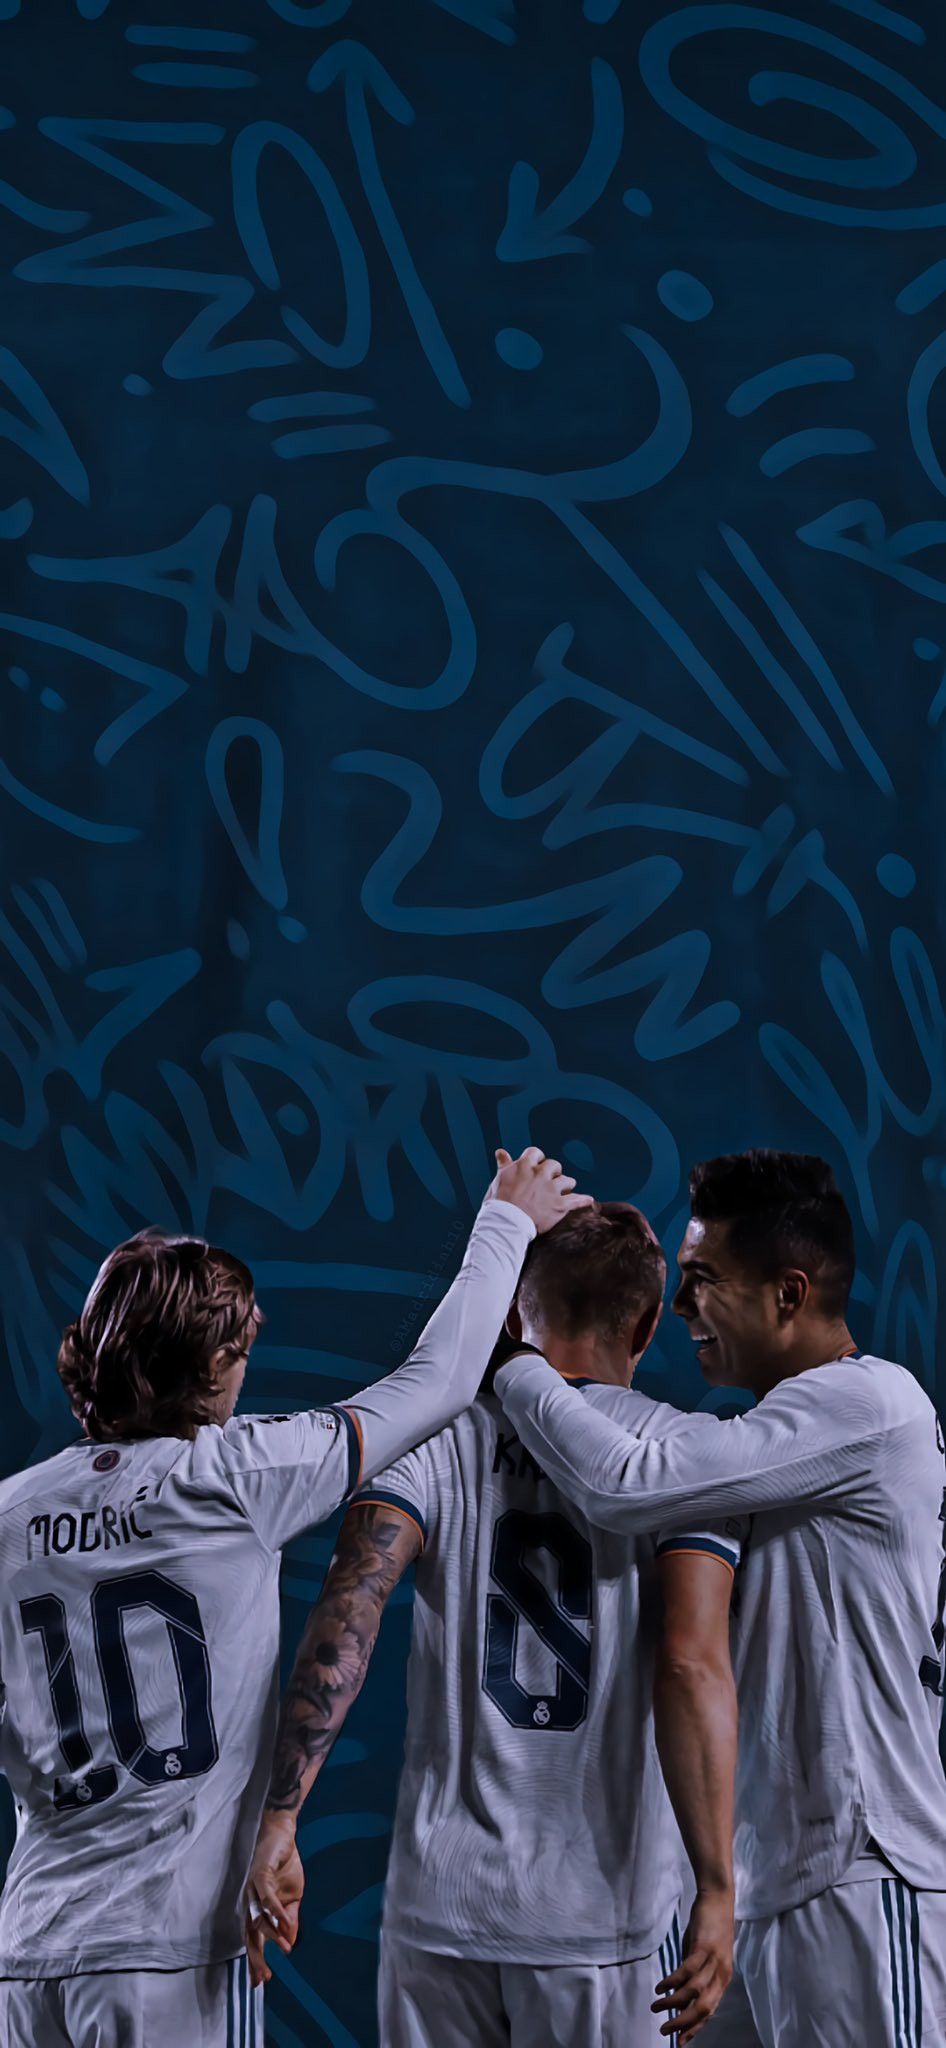 Modric, Kroos and Casemiro wallpaper. Olahraga, Orang